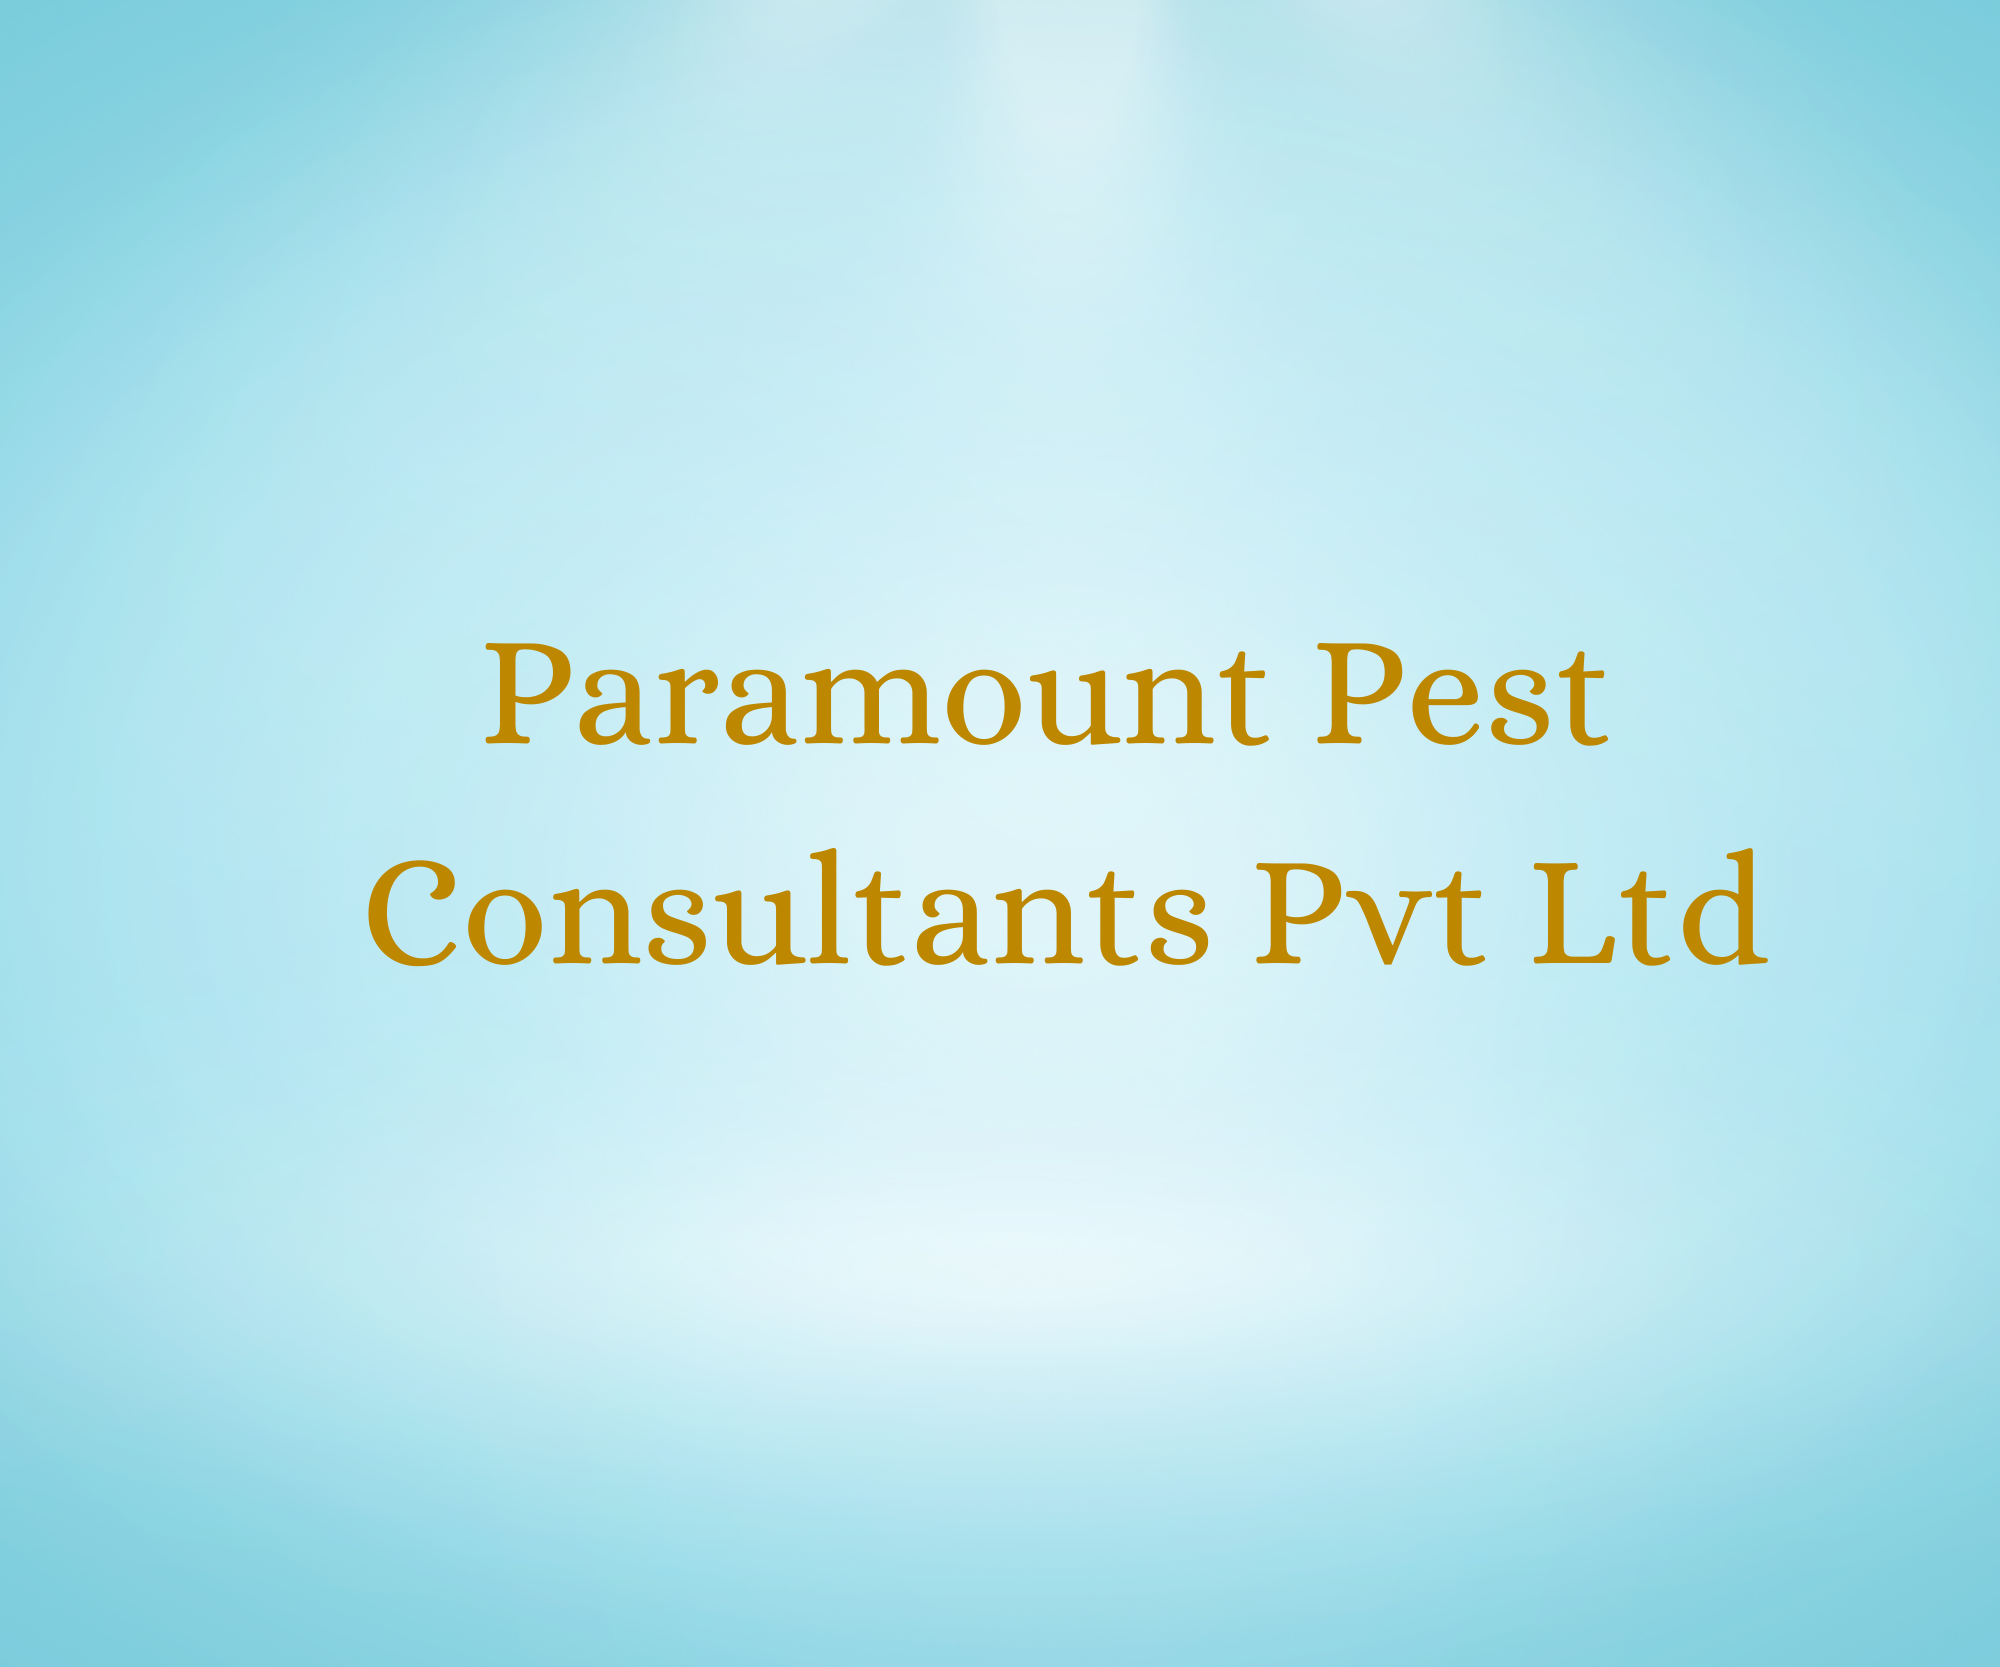 Paramount Pest Consultants Pvt Ltd 